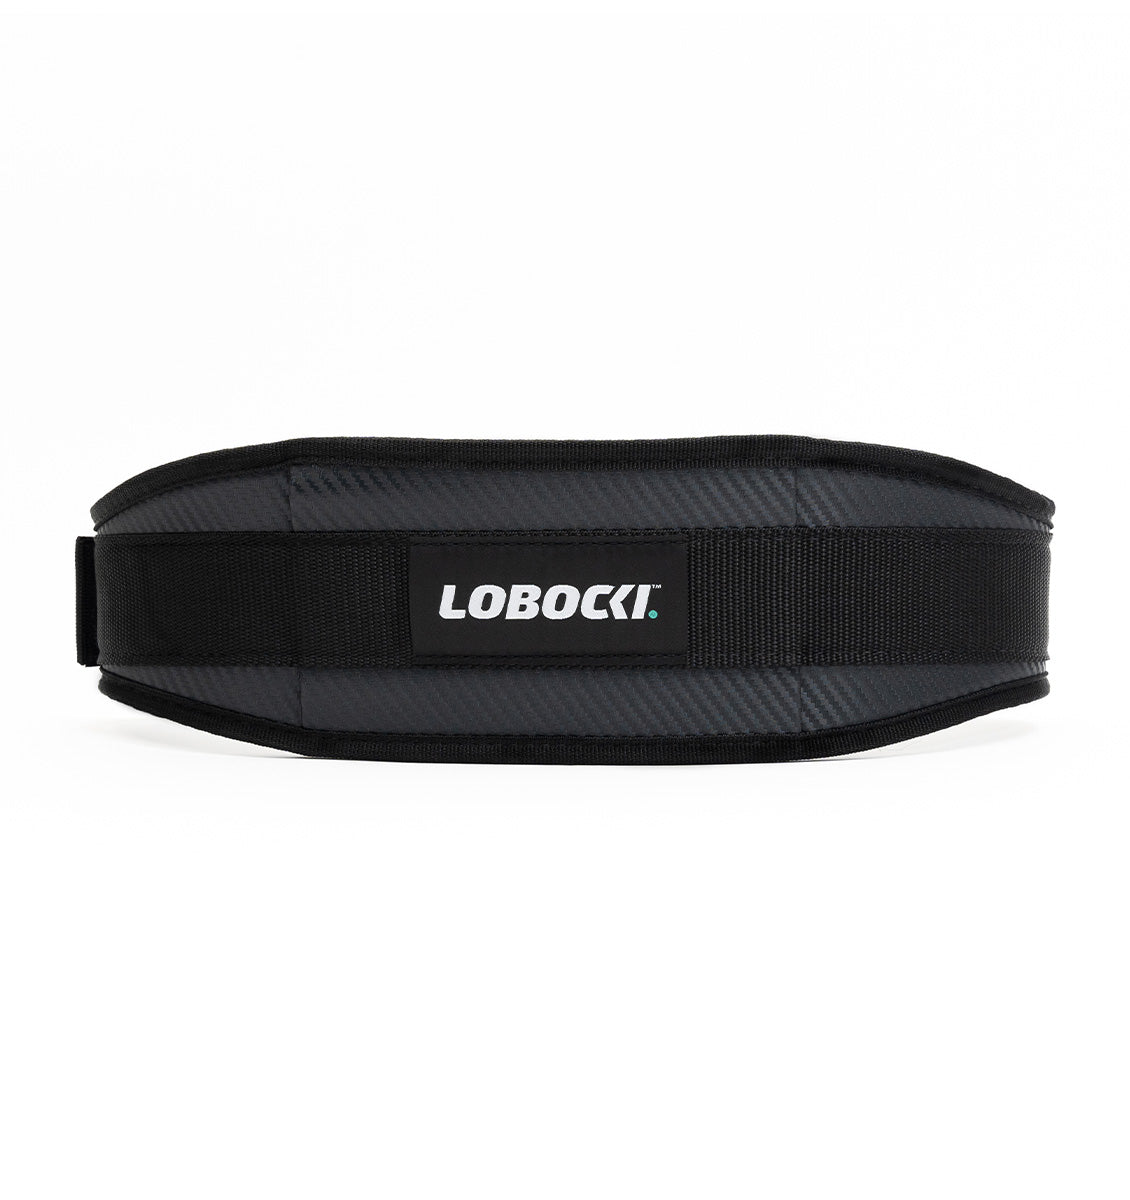 LOBOCKI x Schiek CF3004 Carbon Fibre Contour Weight Lifting Belt - Black - 1